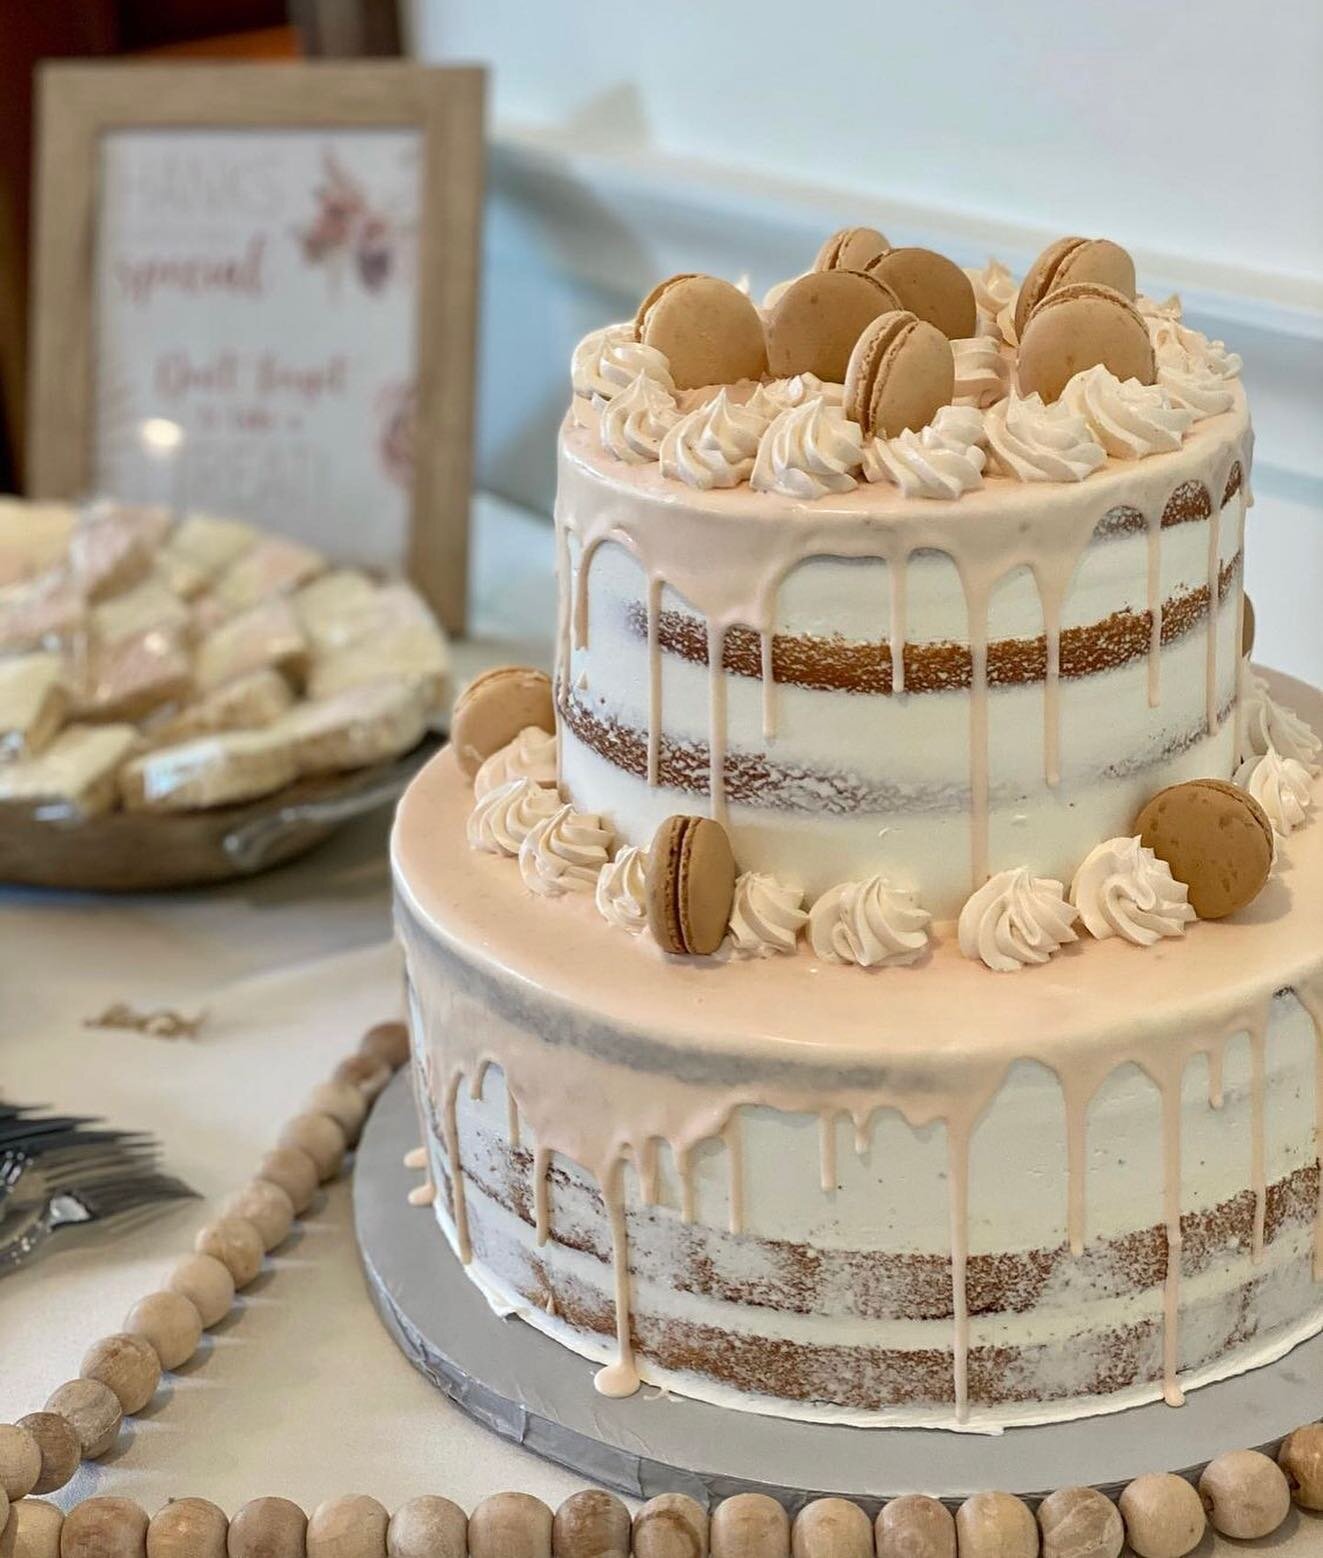 Every special day needs a special cake ✨
.
.
.
.
.
#babyshower #bridalshower #weddingcake #nakedcake #cakeandmacarons #bloomfieldnj #njbakery #njbaker #dessert #yummy #cake #cakeofinstagram #bridalcake